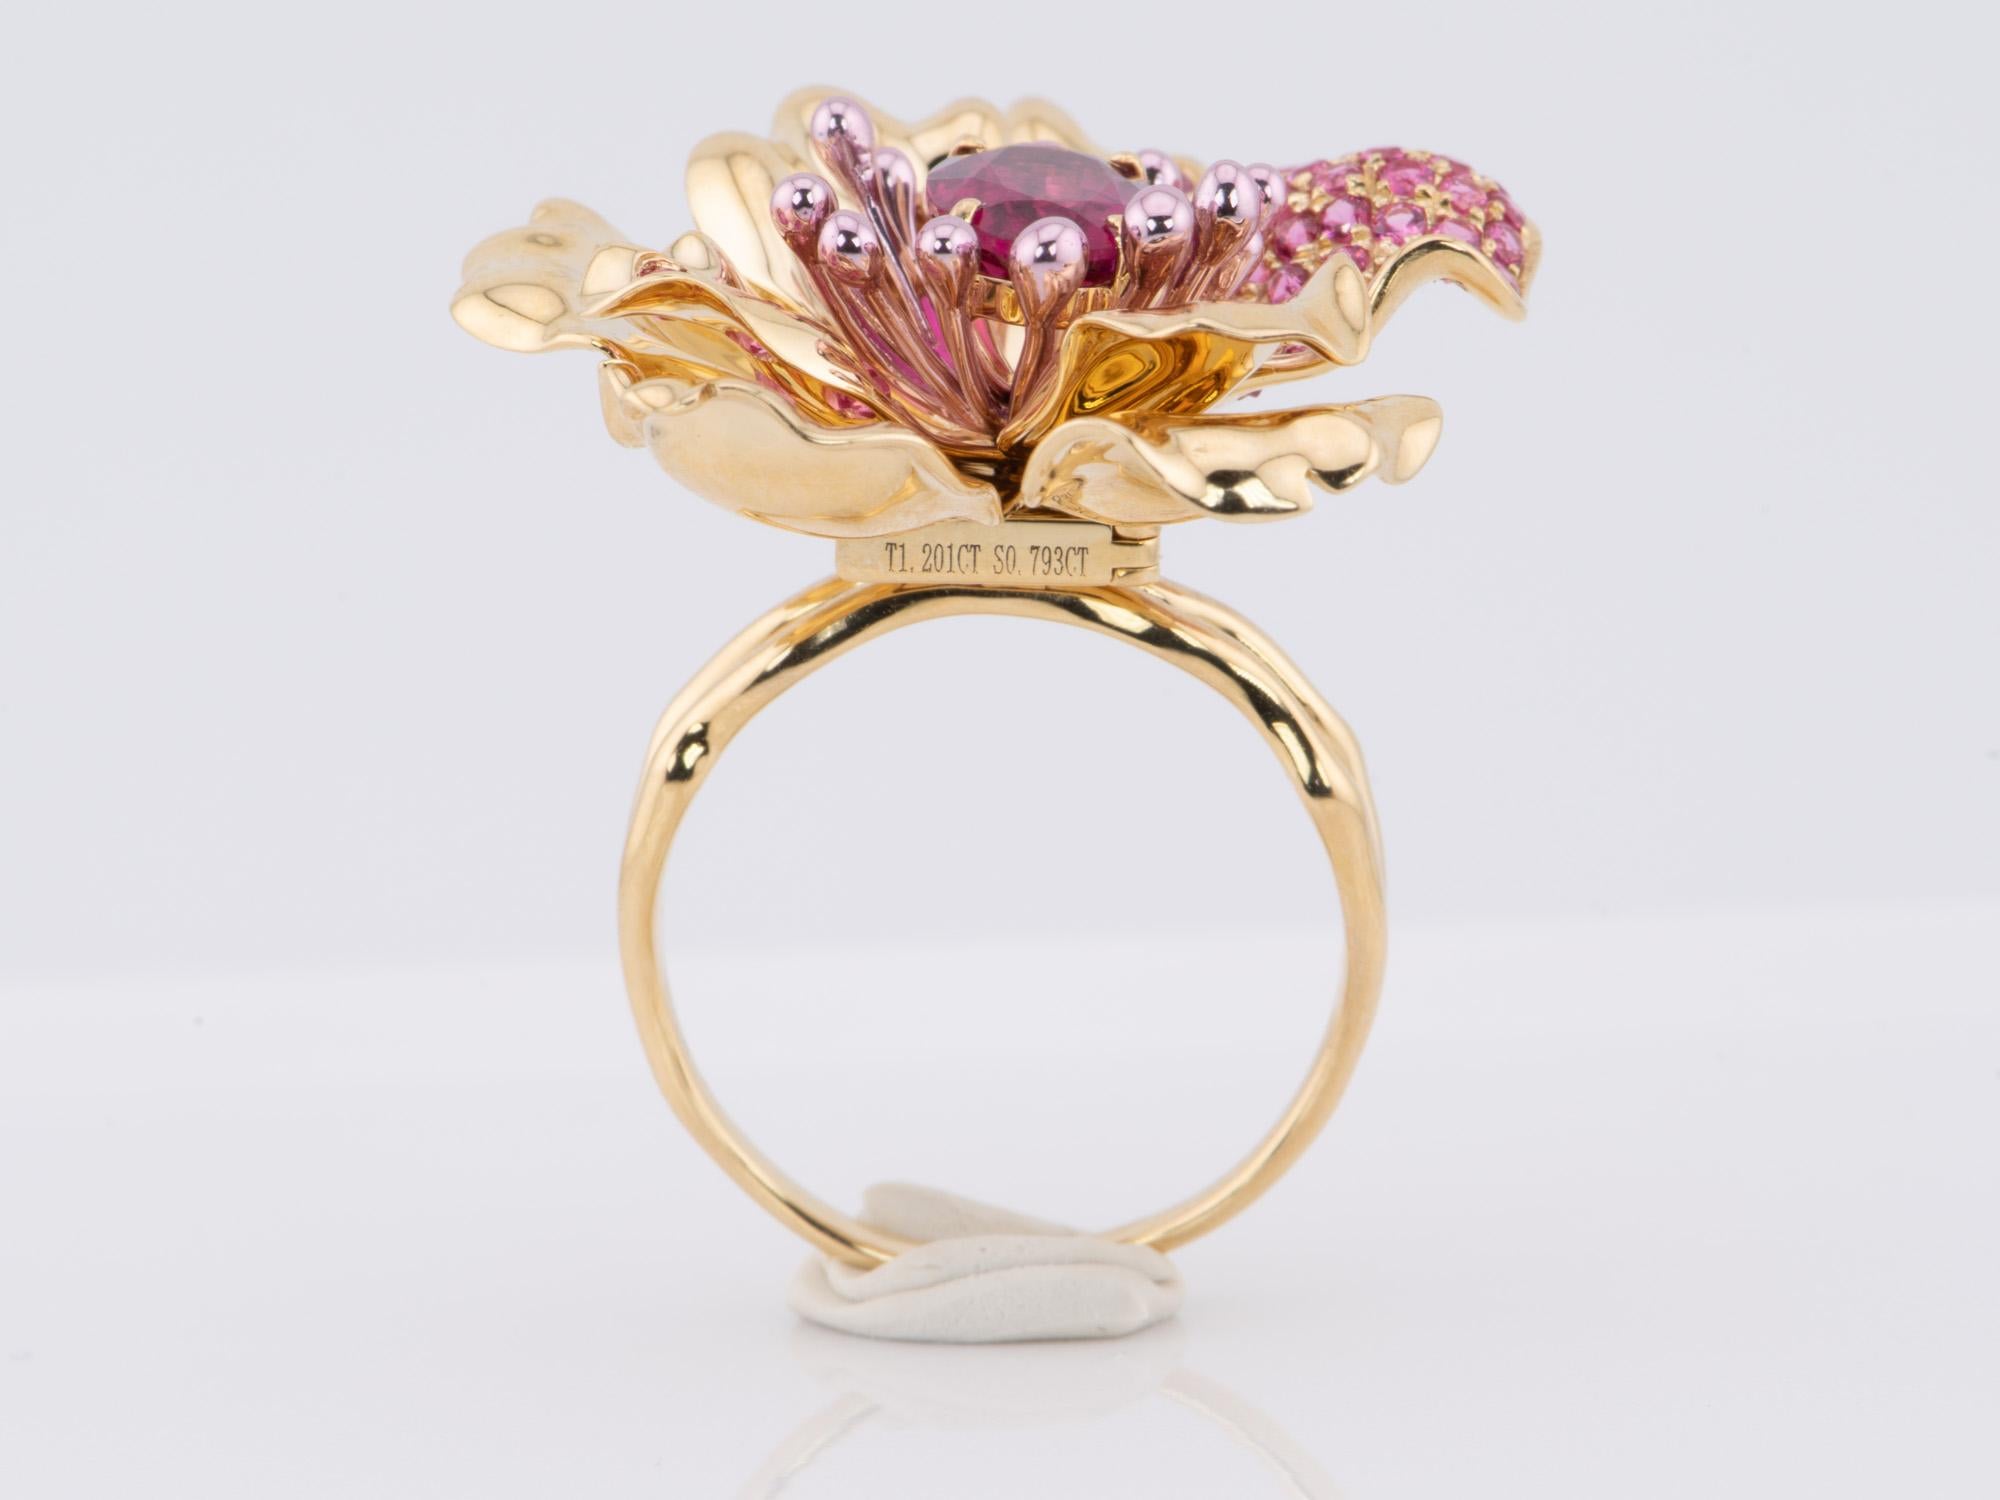 Art Jewelry Rubellite Tourmaline Center Flower Ring / Pendant 18K Gold R6641 For Sale 7